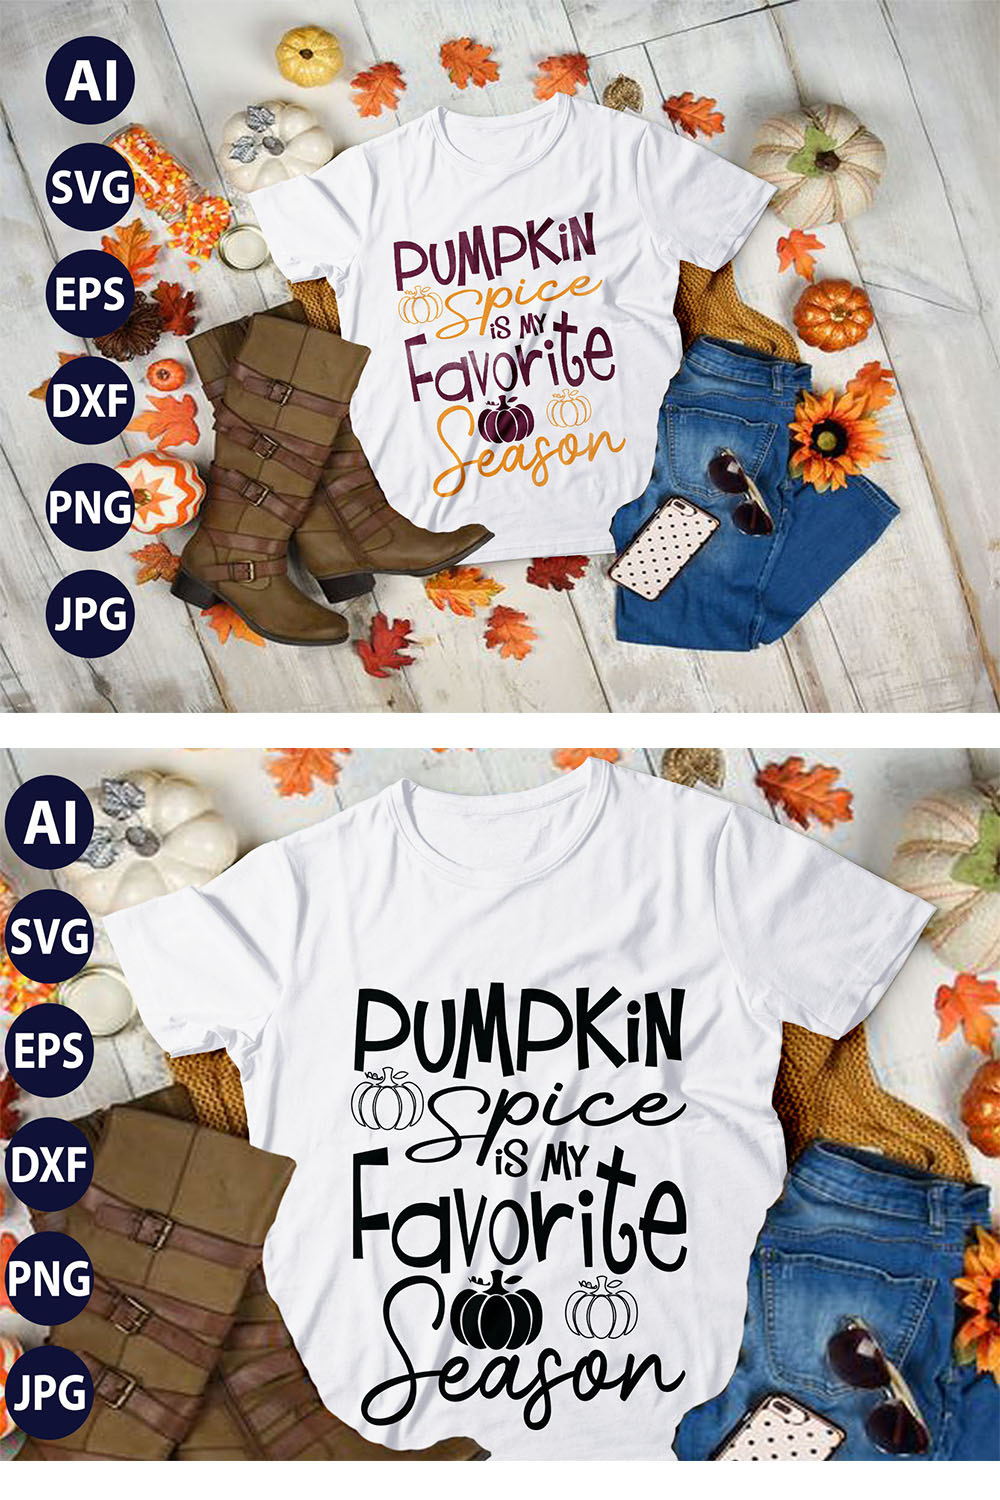 Pumpkin Spice is my Favorite Season, SVG T-Shirt Design |Happy Halloween & Pumpkin T-Shirt Design | Ai, Svg, Eps, Dxf, Jpeg, Png, Instant download T-Shirt | 100% print-ready Digital vector file pinterest preview image.